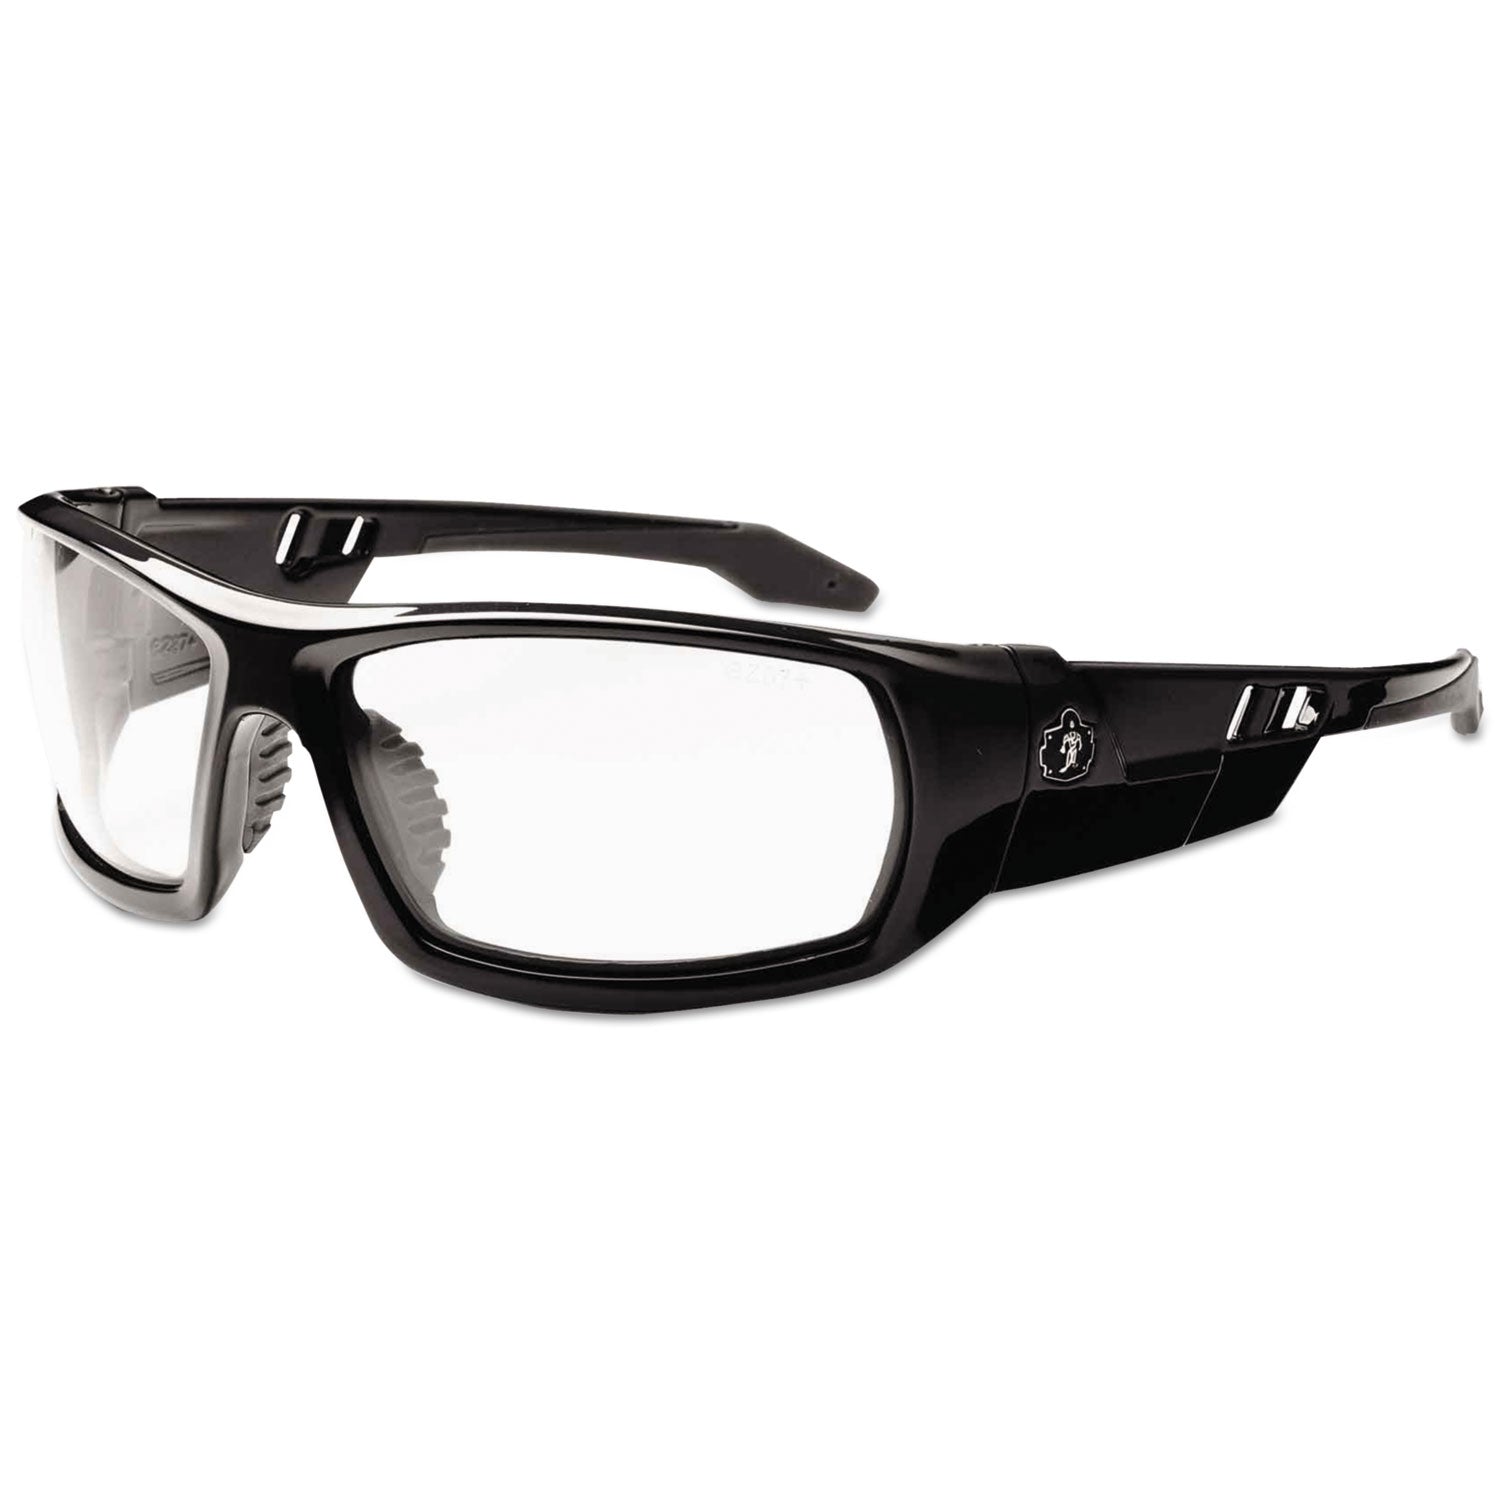 skullerz-odin-safety-glasses-black-frame-clear-lens-anti-fog-nylon-polycarb-ships-in-1-3-business-days_ego50003 - 1